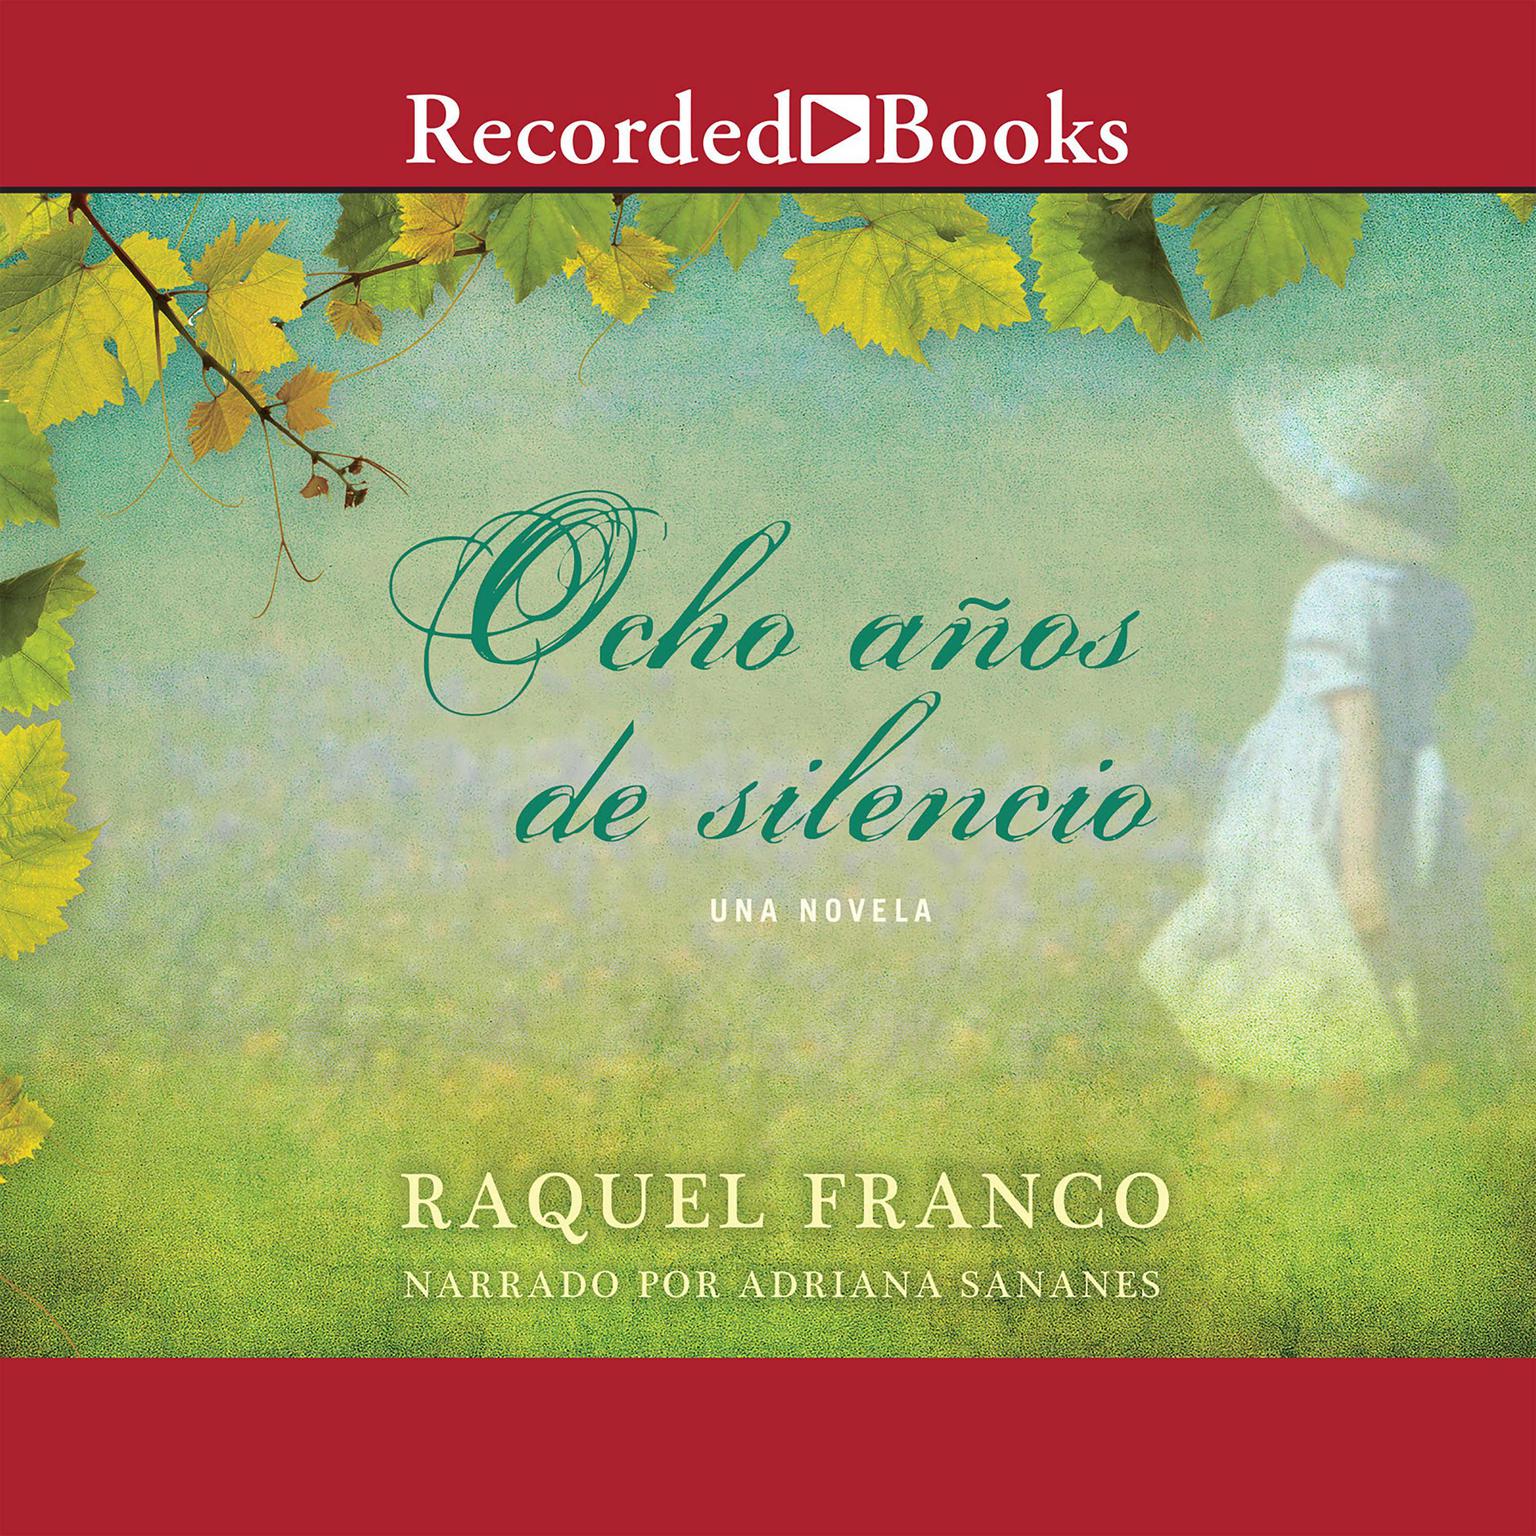 Ocho anos de silencio (Eight Years of Silence) Audiobook, by Raquel Franco